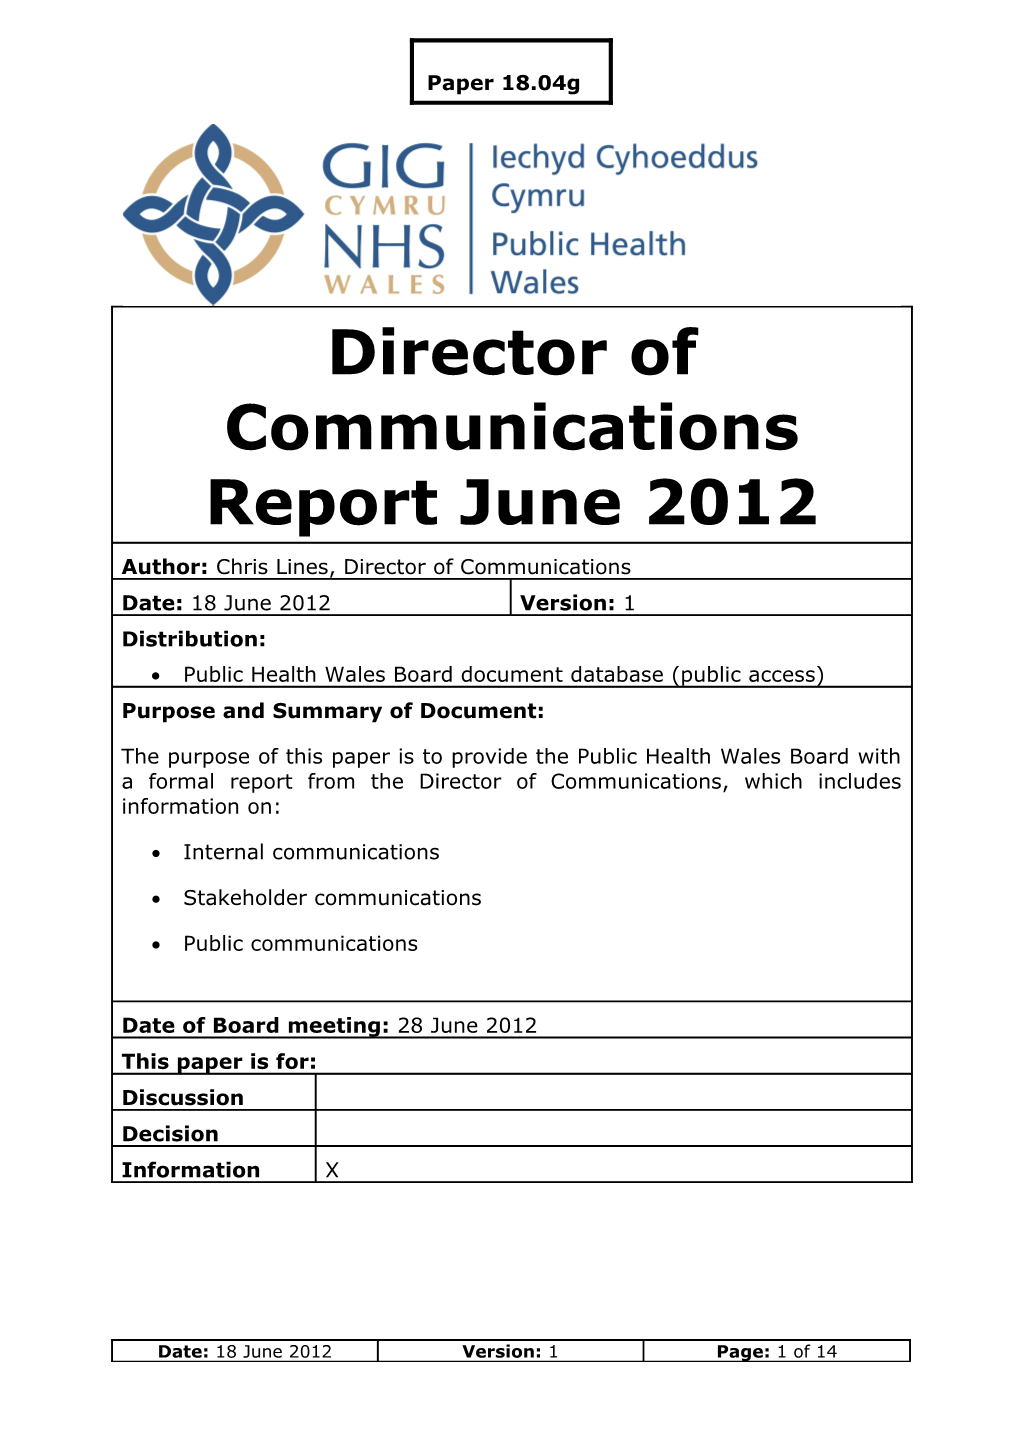 Public Health Wales Board Document Database (Public Access)